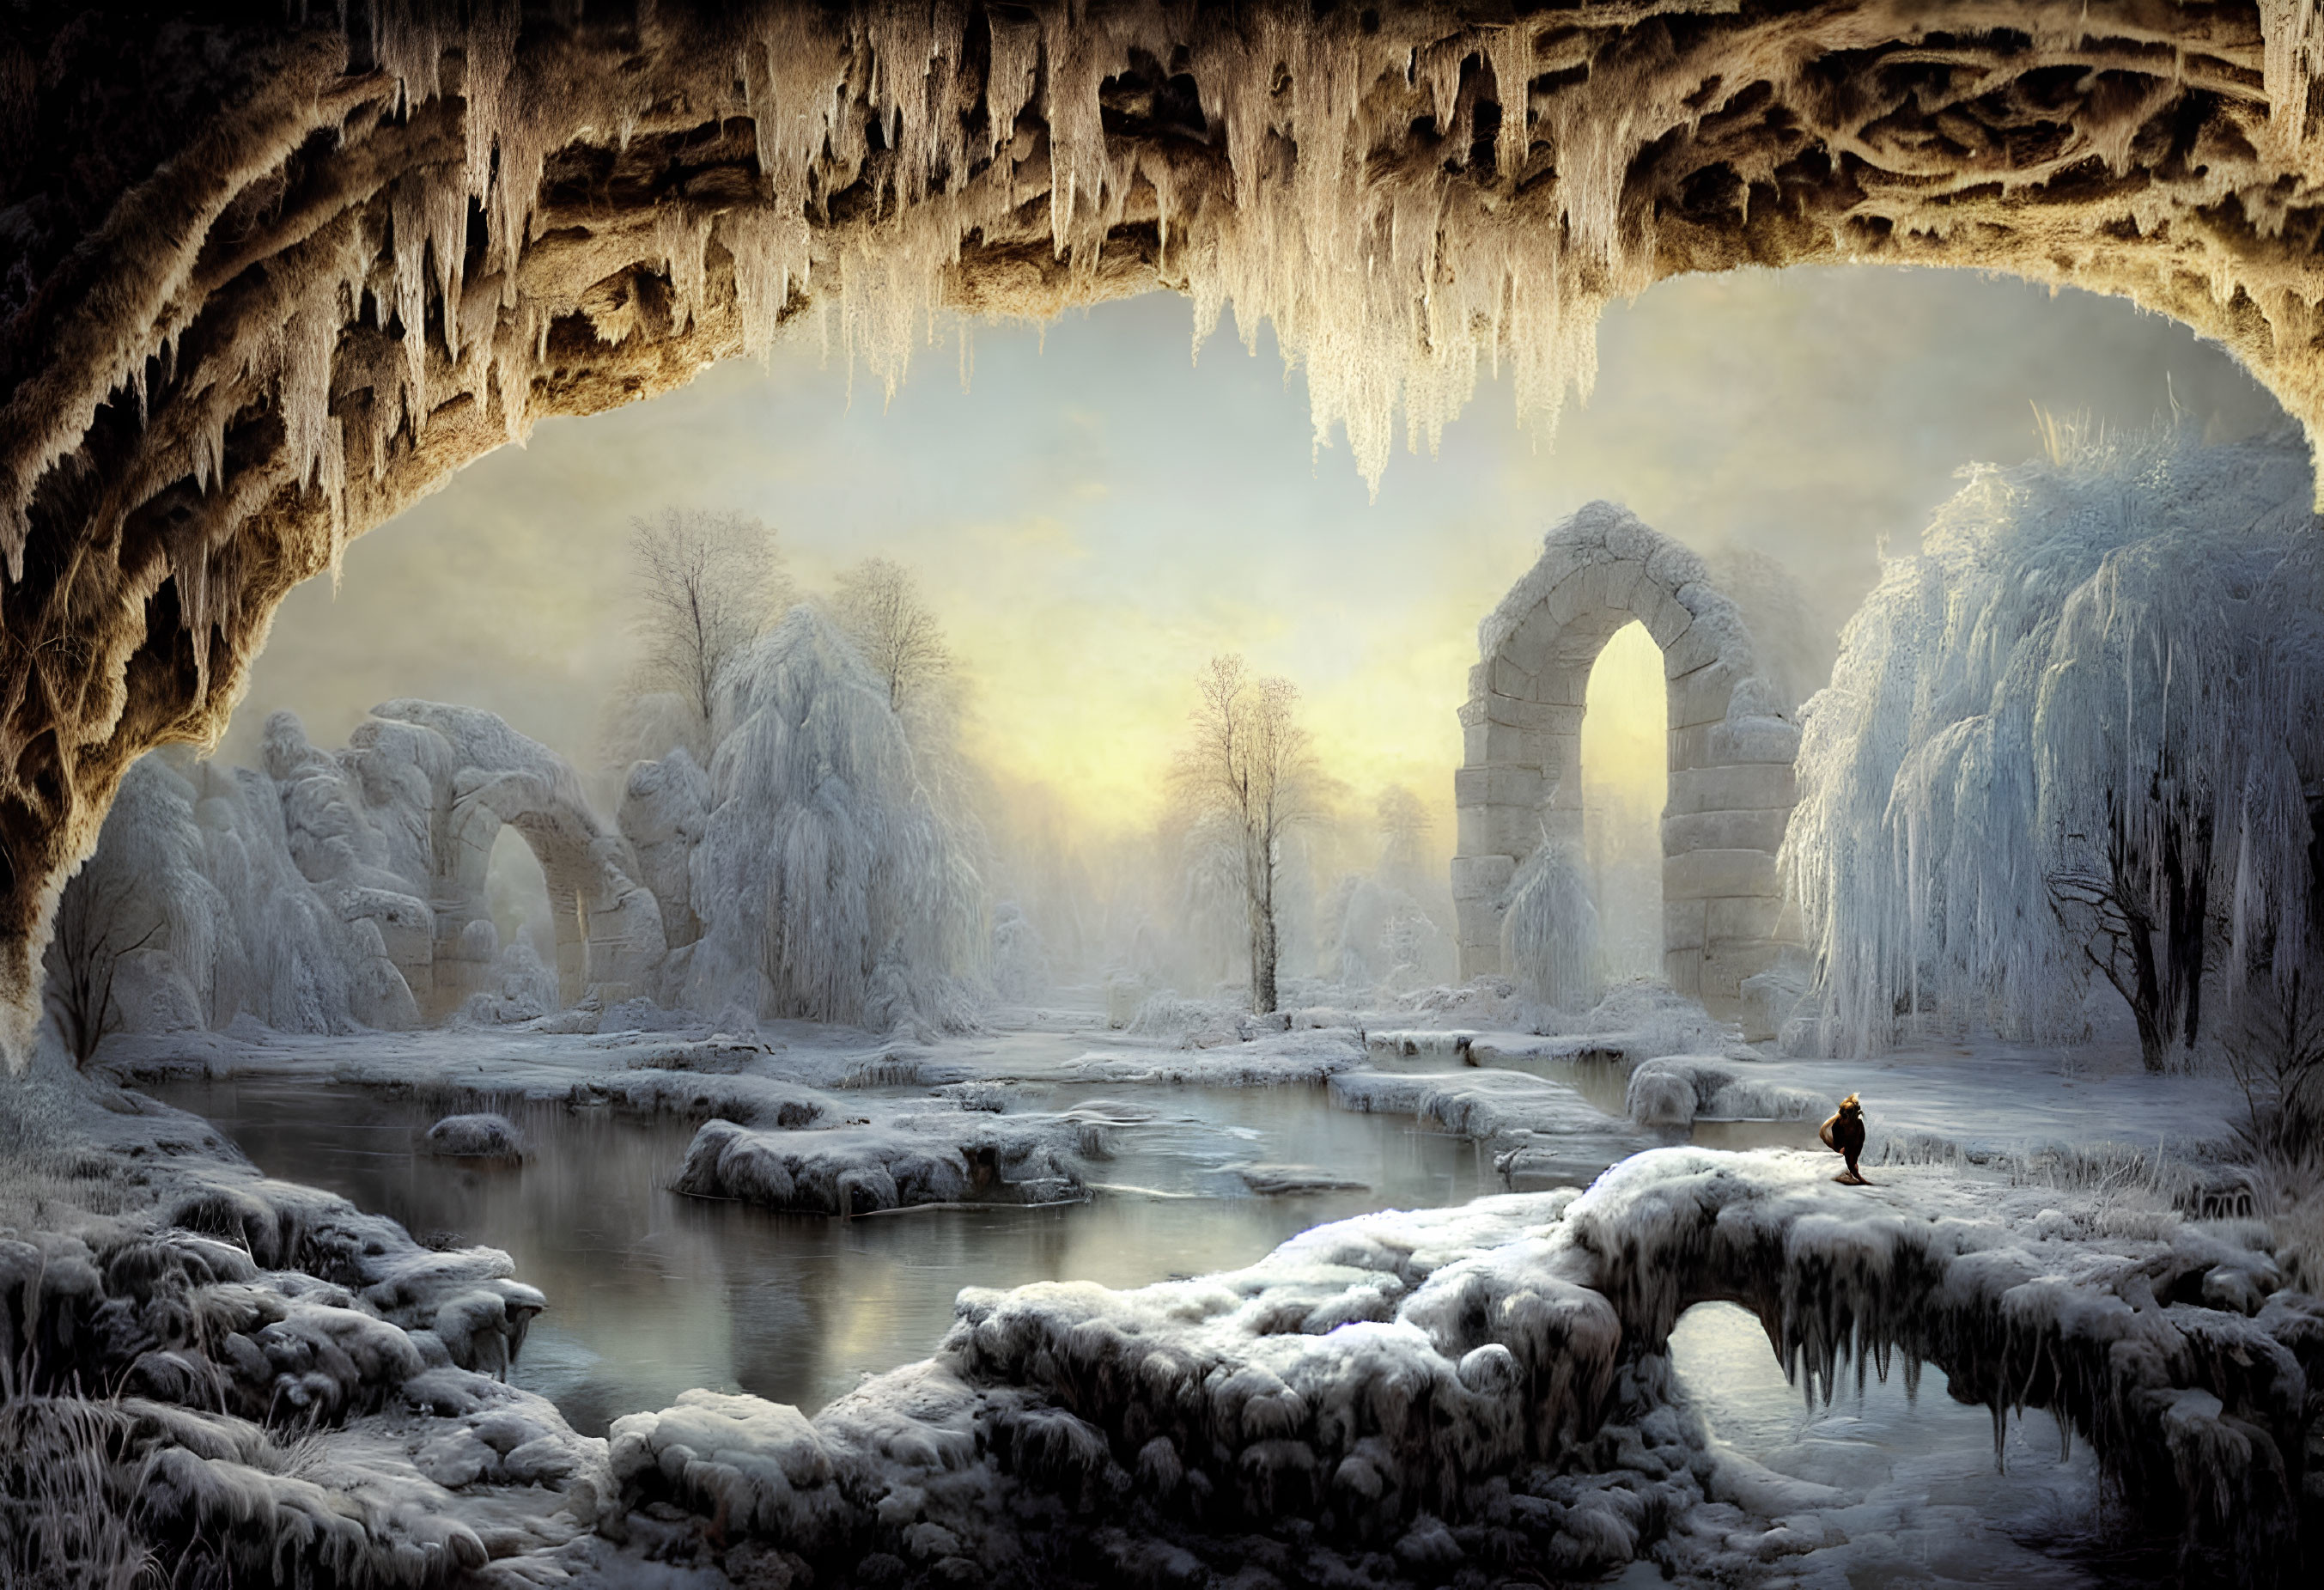 Frozen river and stone ruins in serene winter landscape